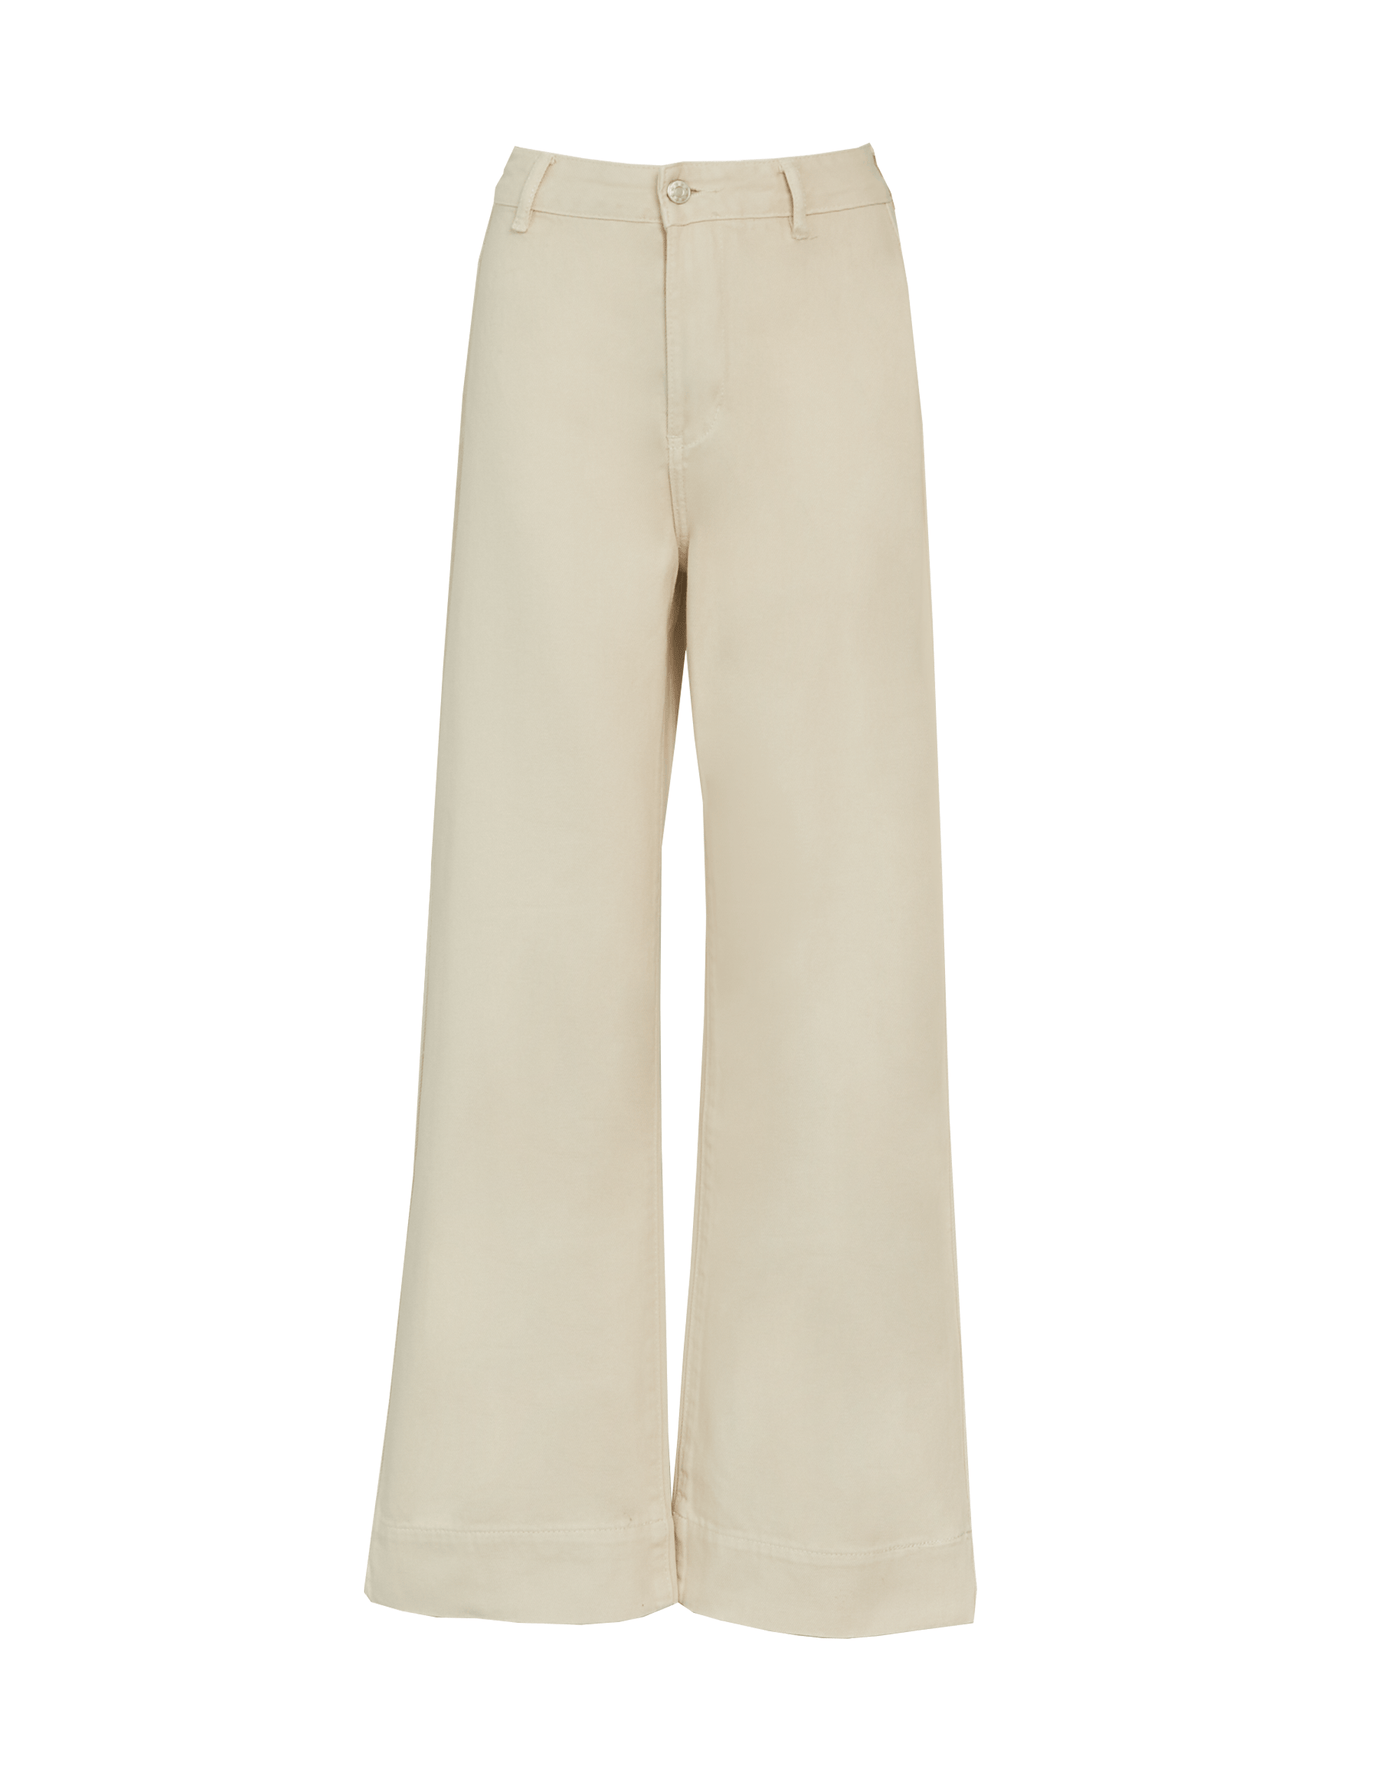 Antoni Jeans (Pumice) - Wide Leg Cream Jeans - Women's Pants - Charcoal Clothing